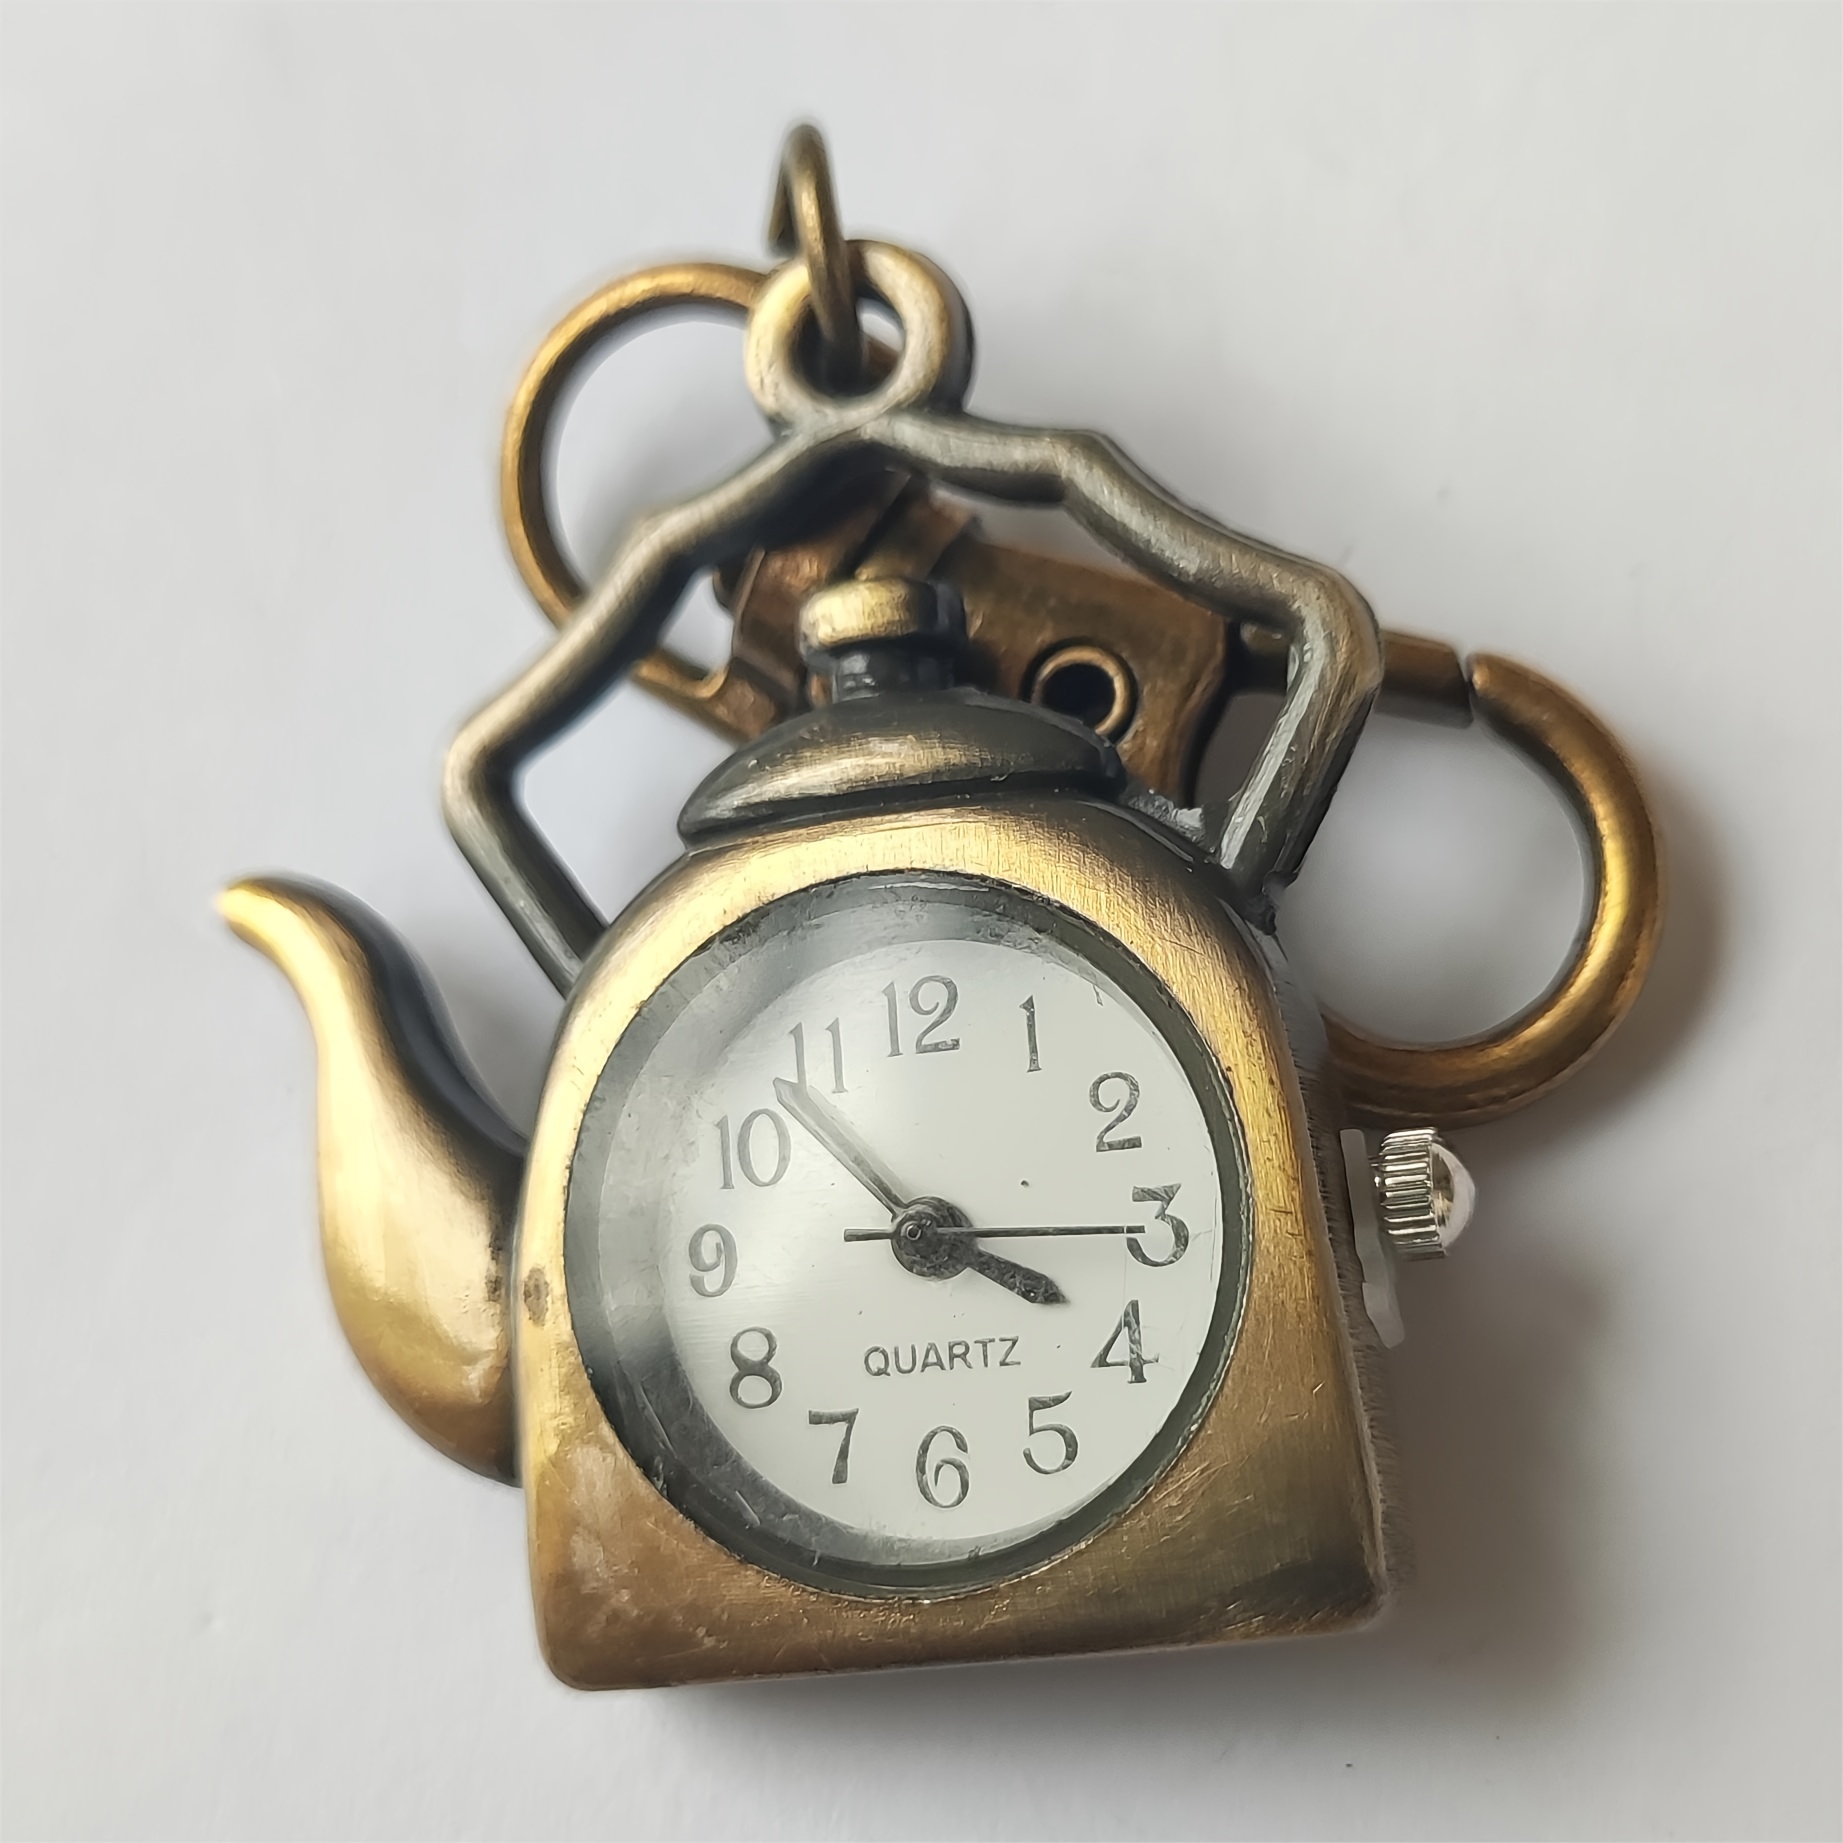 teapot shape pocket watch creative bronze keychain novelty quartz watch car keychain pendant bag accessories lovely gift nurse watch 0